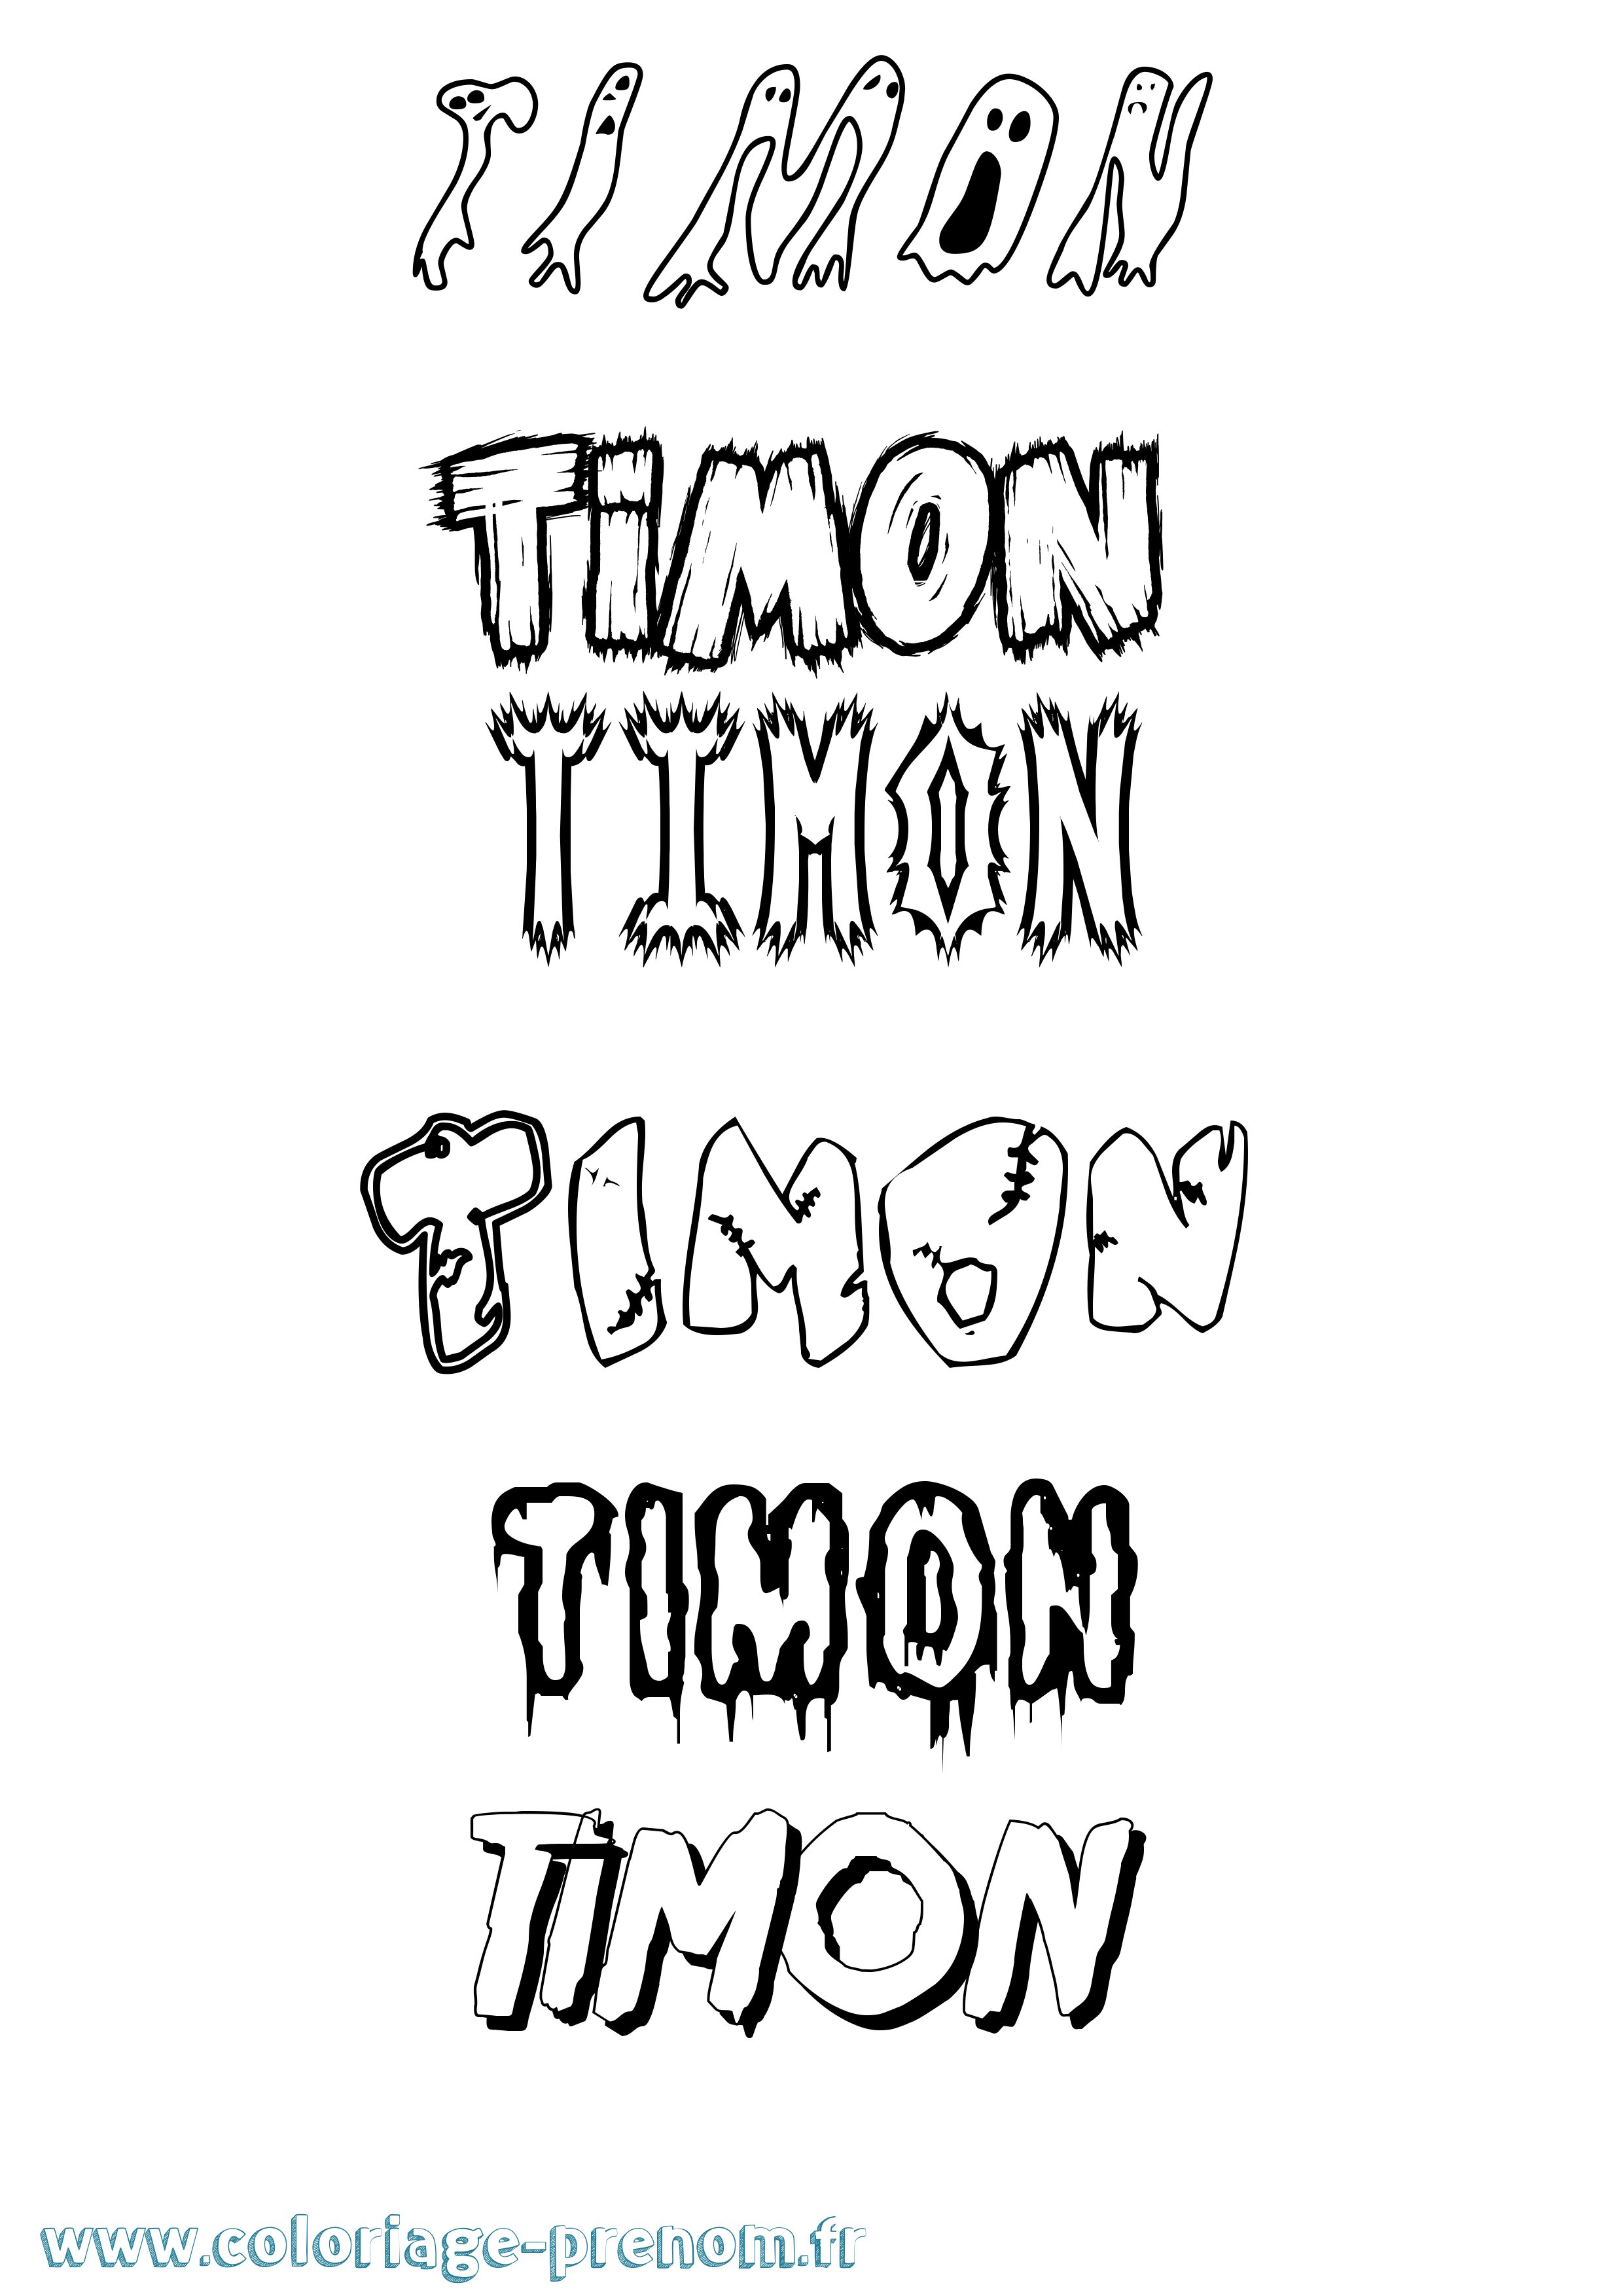 Coloriage prénom Timon Frisson